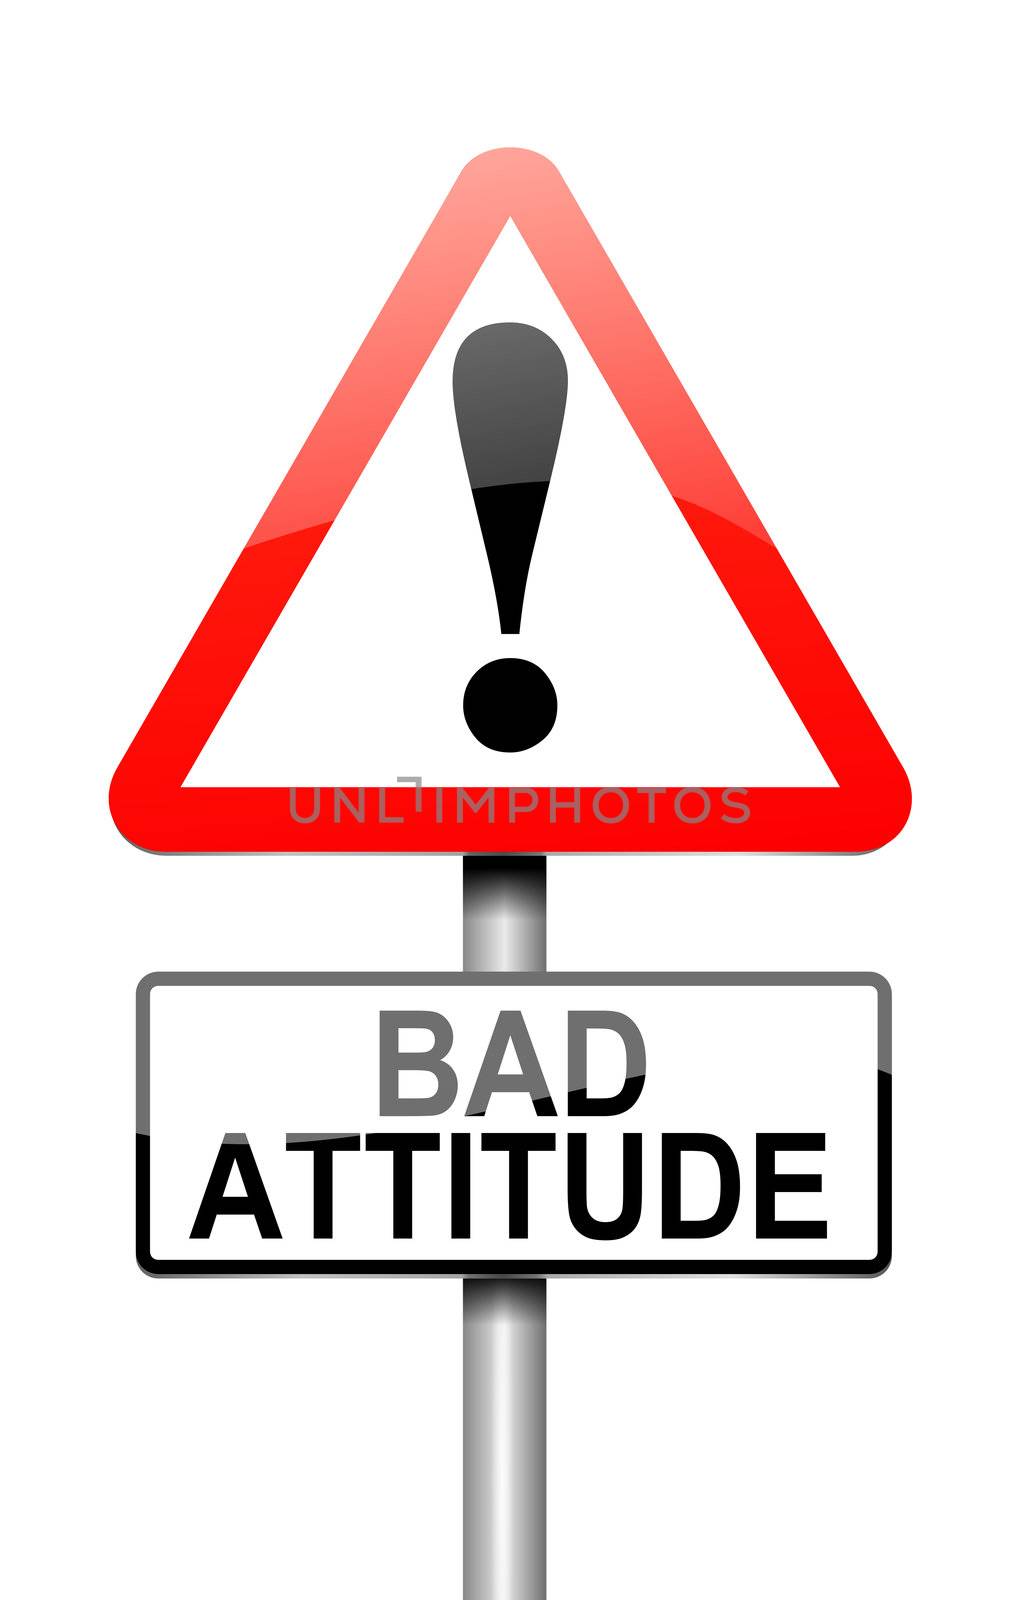 Bad attitude concept. by 72soul